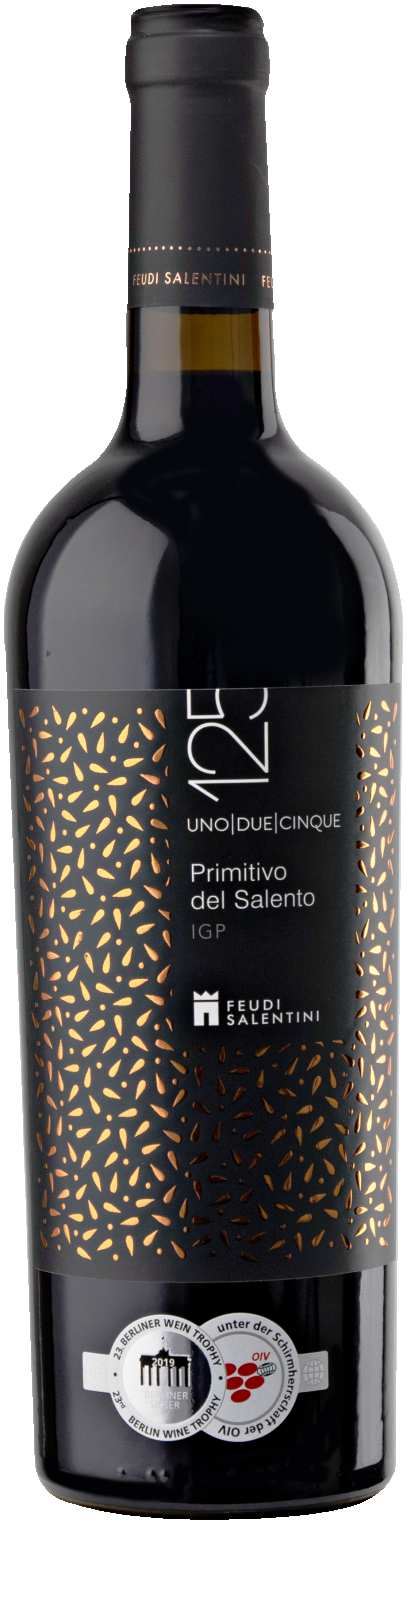 125 Primitivo del Salento Puglia Italië lekkere rode wijn aanbieding